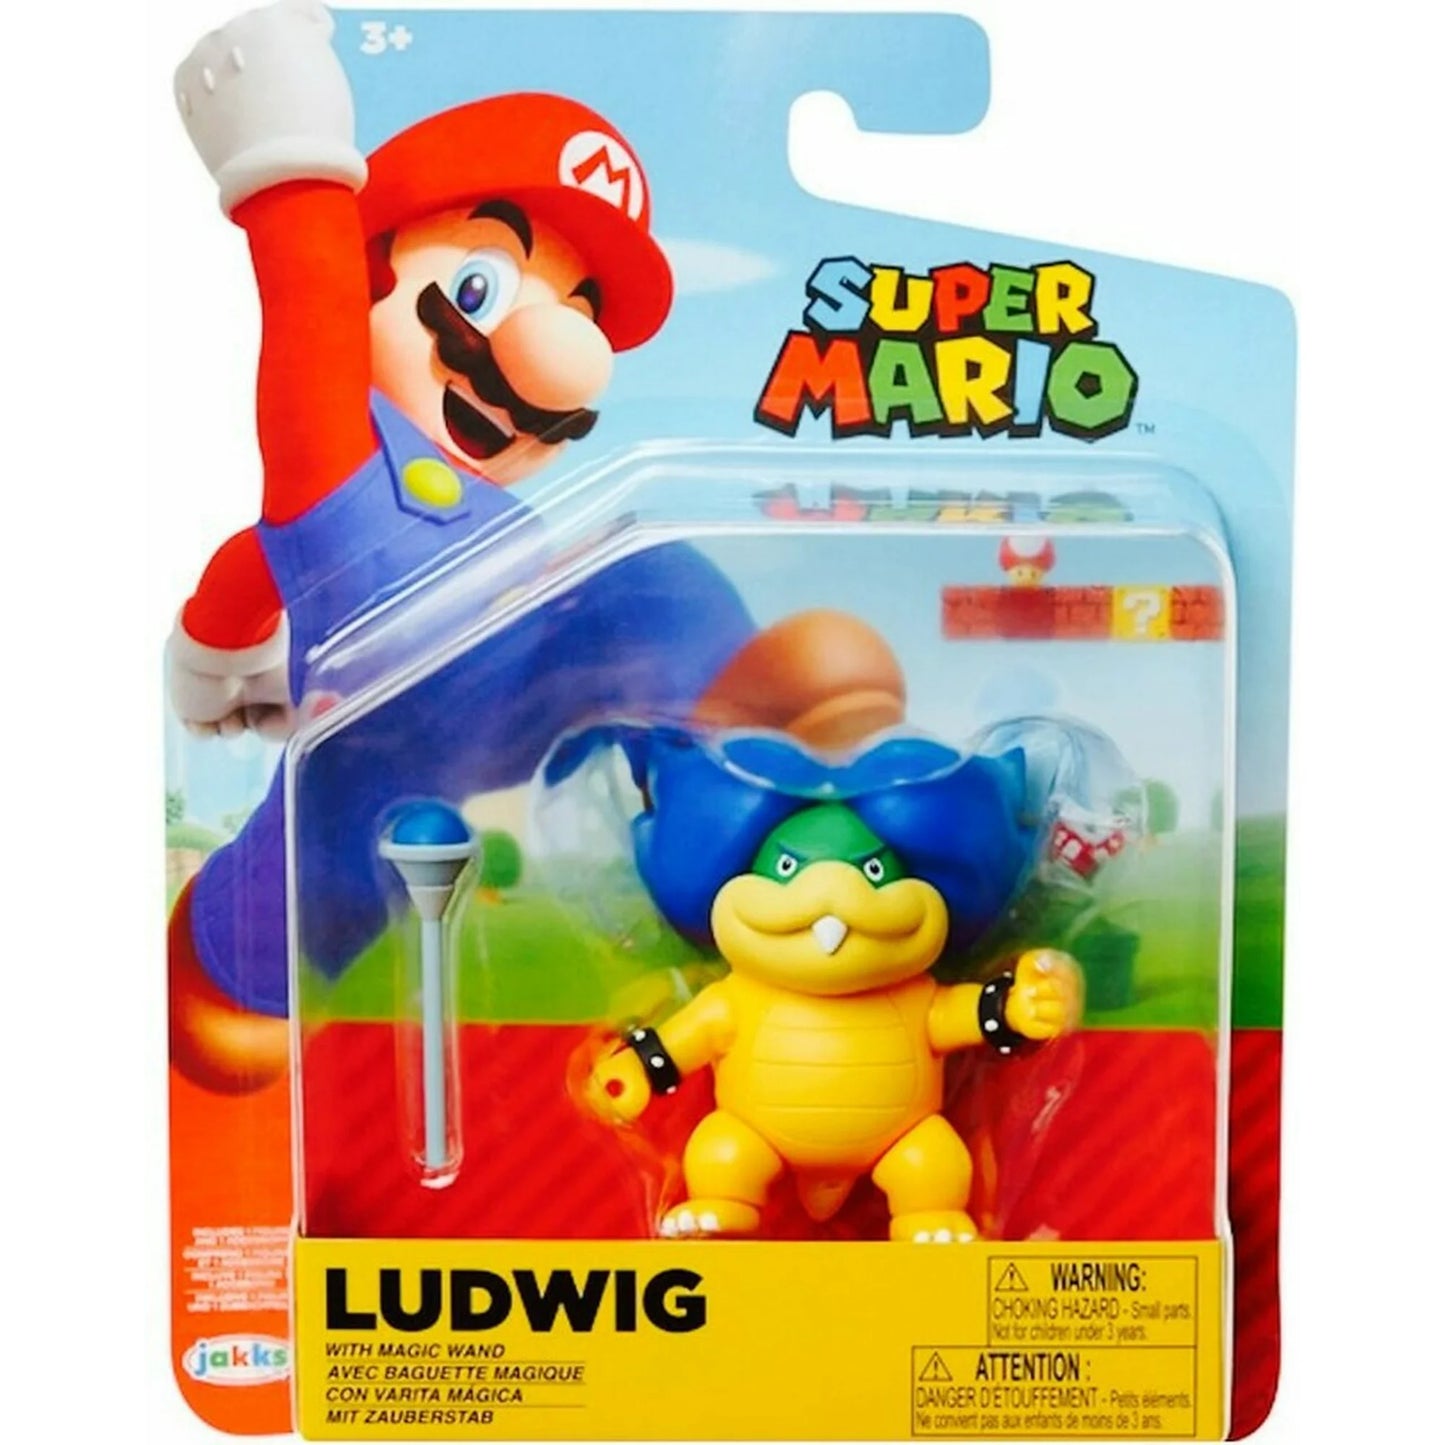 Jakks Pacific - Super Mario Ludwig with Wand